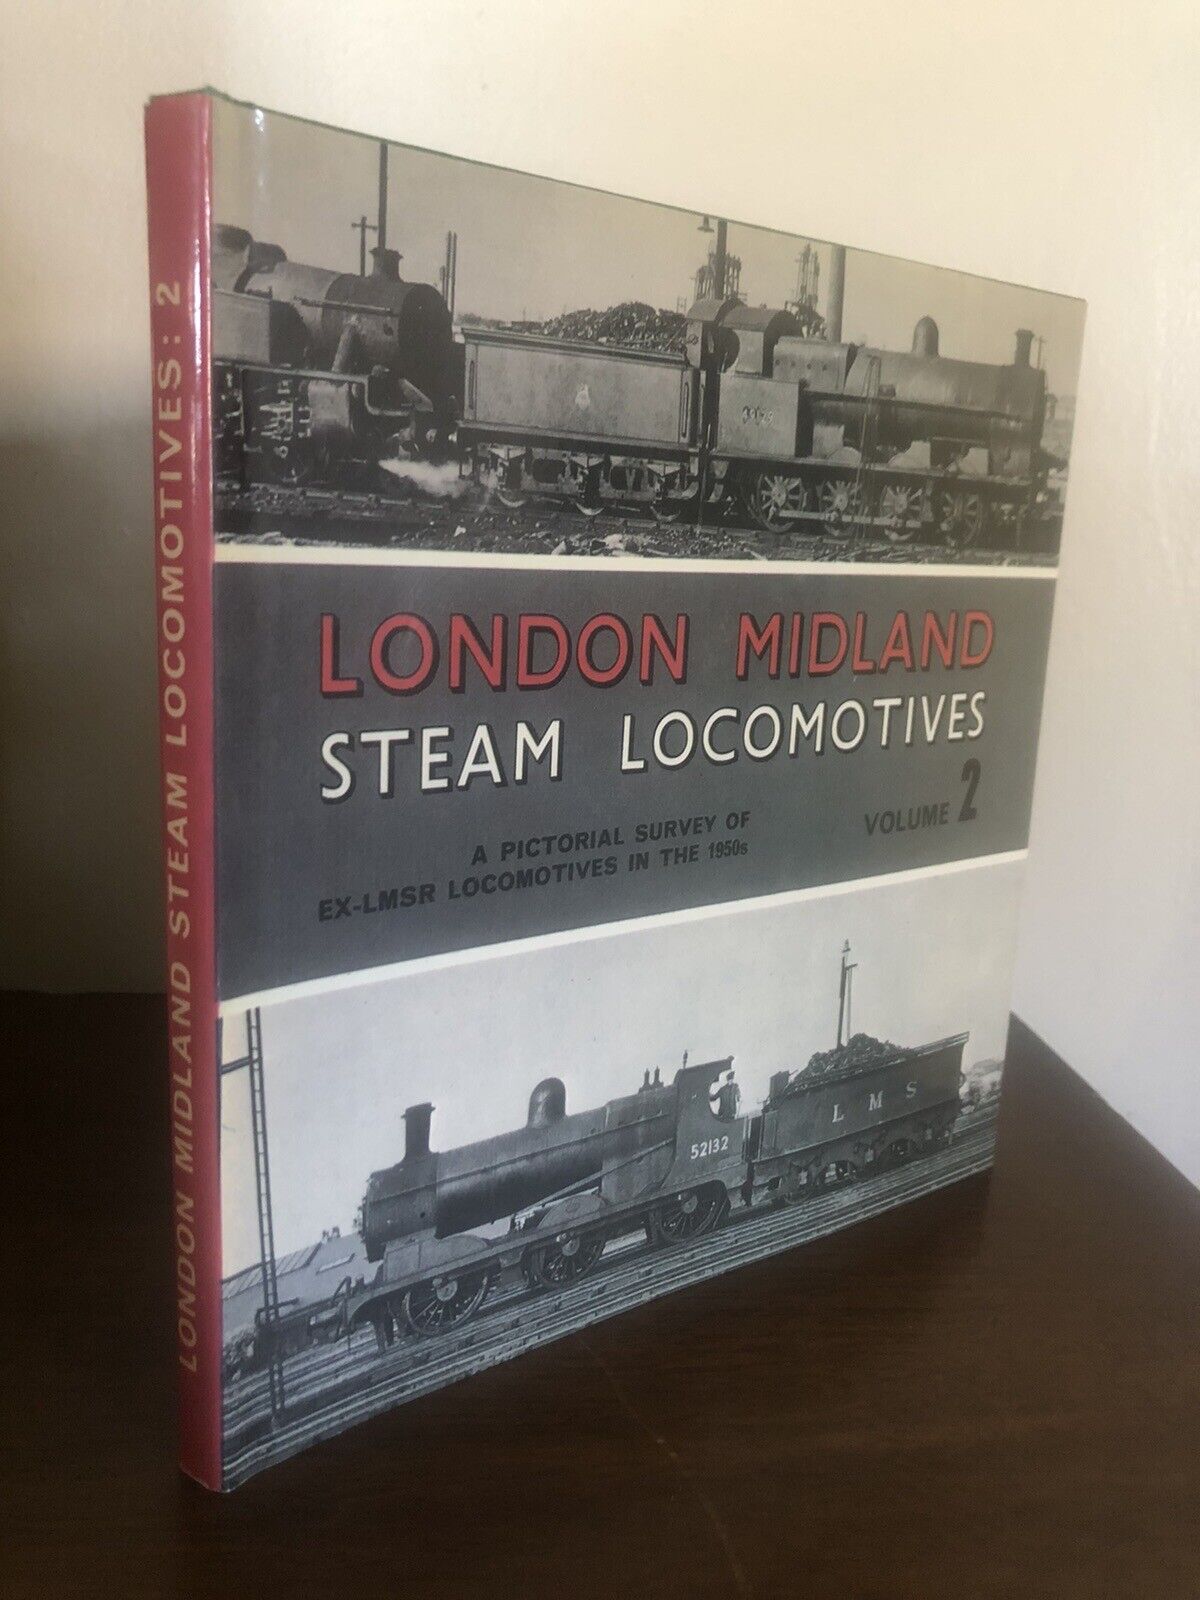 London Midland Steam Locomotives Vol 2 (2004) Pictorial EX-LMSR In The 1950’s